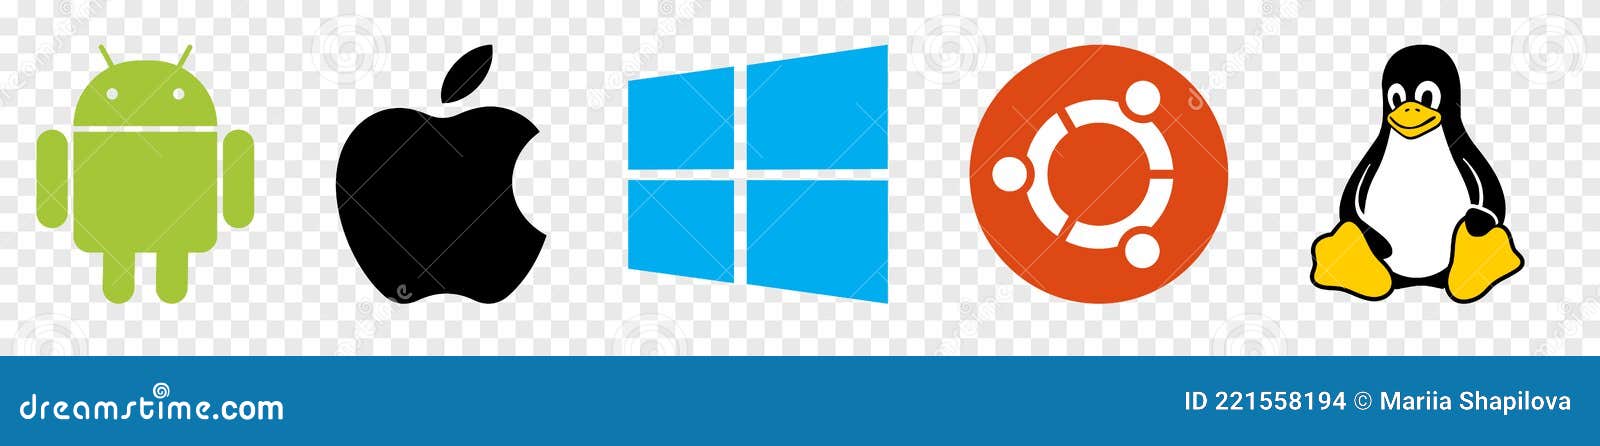 Logos de Windows, macOS, Linux